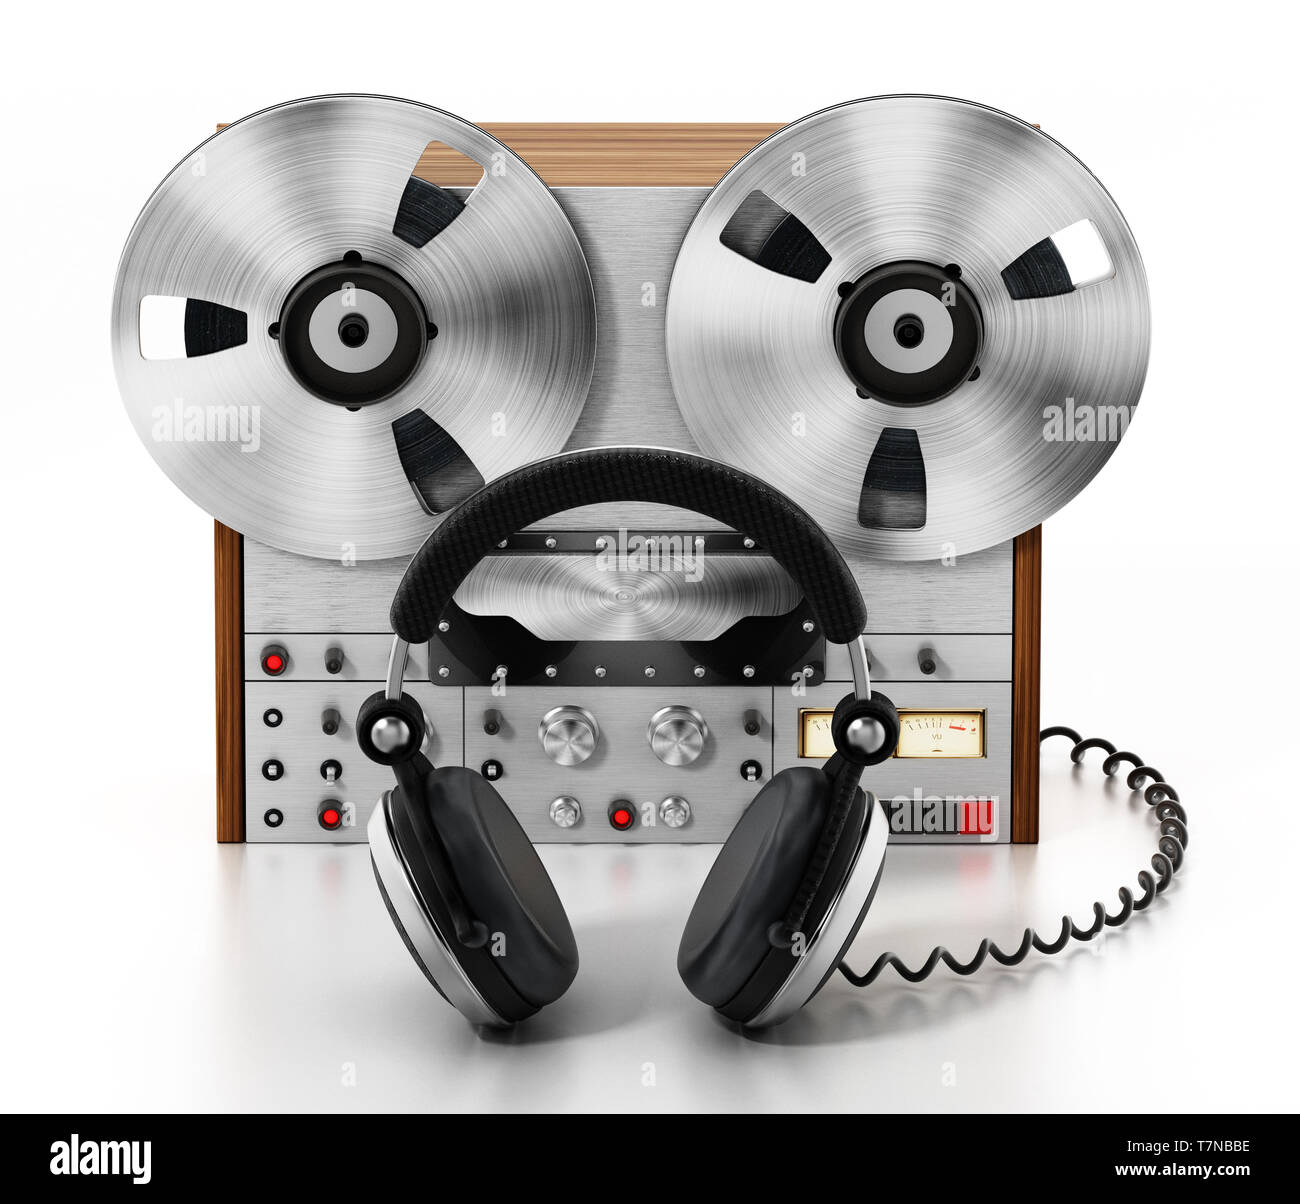 Recording machine and headphones isolated on white background. 3D illustration. Stock Photo